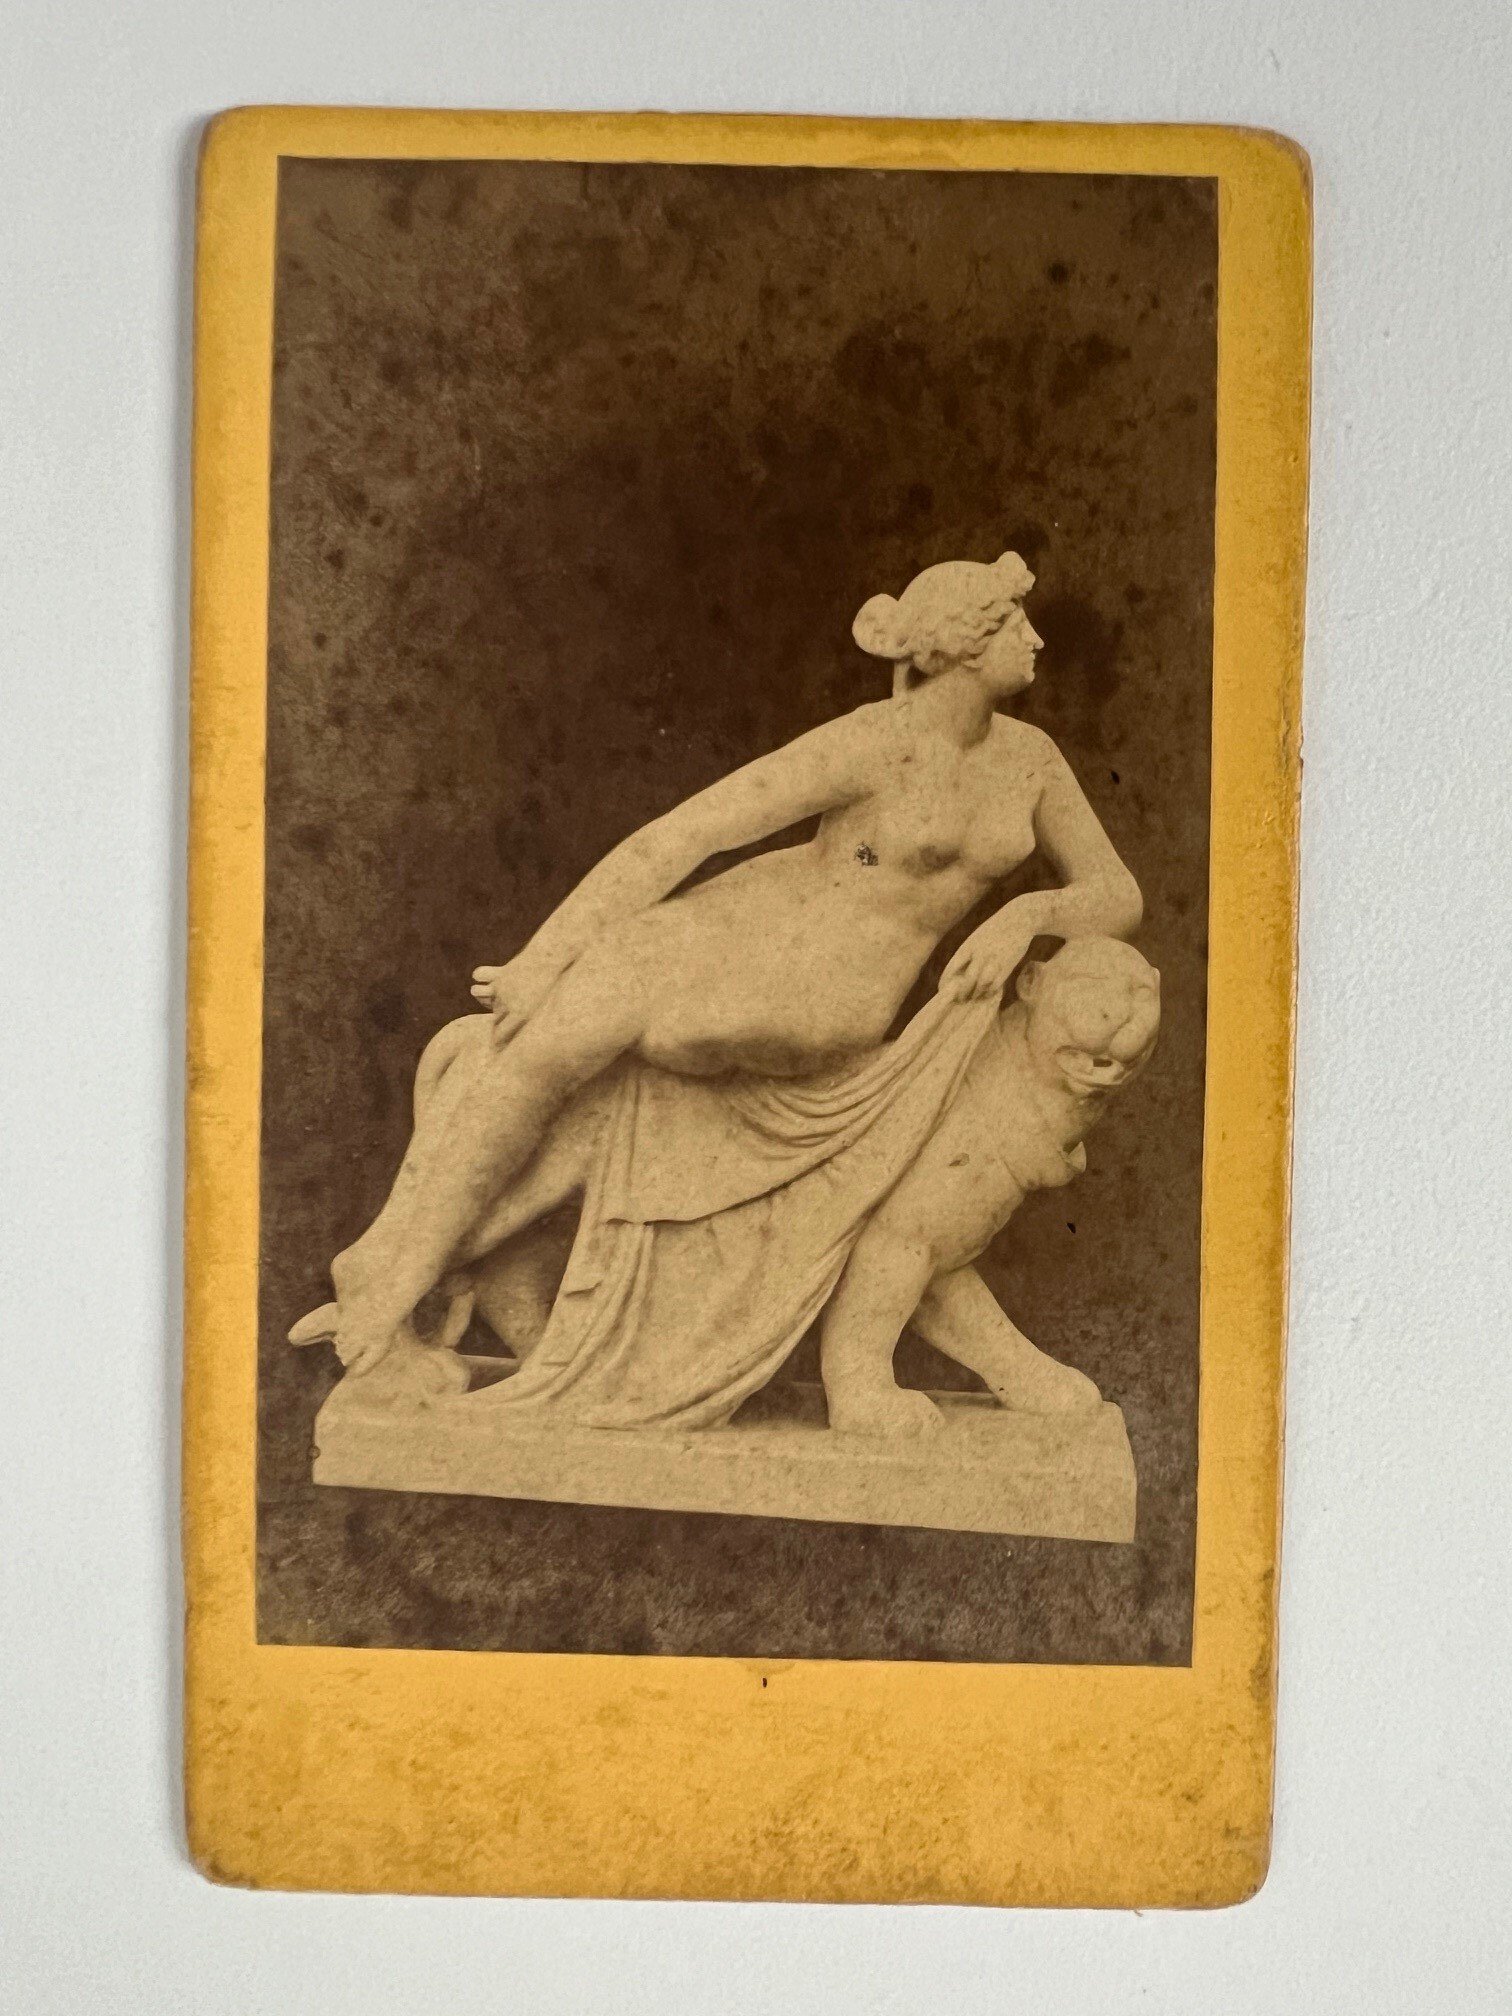 CdV, Unbekanter Fotograf, Frankfurt, Ariadne, ca. 1874. (Taunus-Rhein-Main - Regionalgeschichtliche Sammlung Dr. Stefan Naas CC BY-NC-SA)